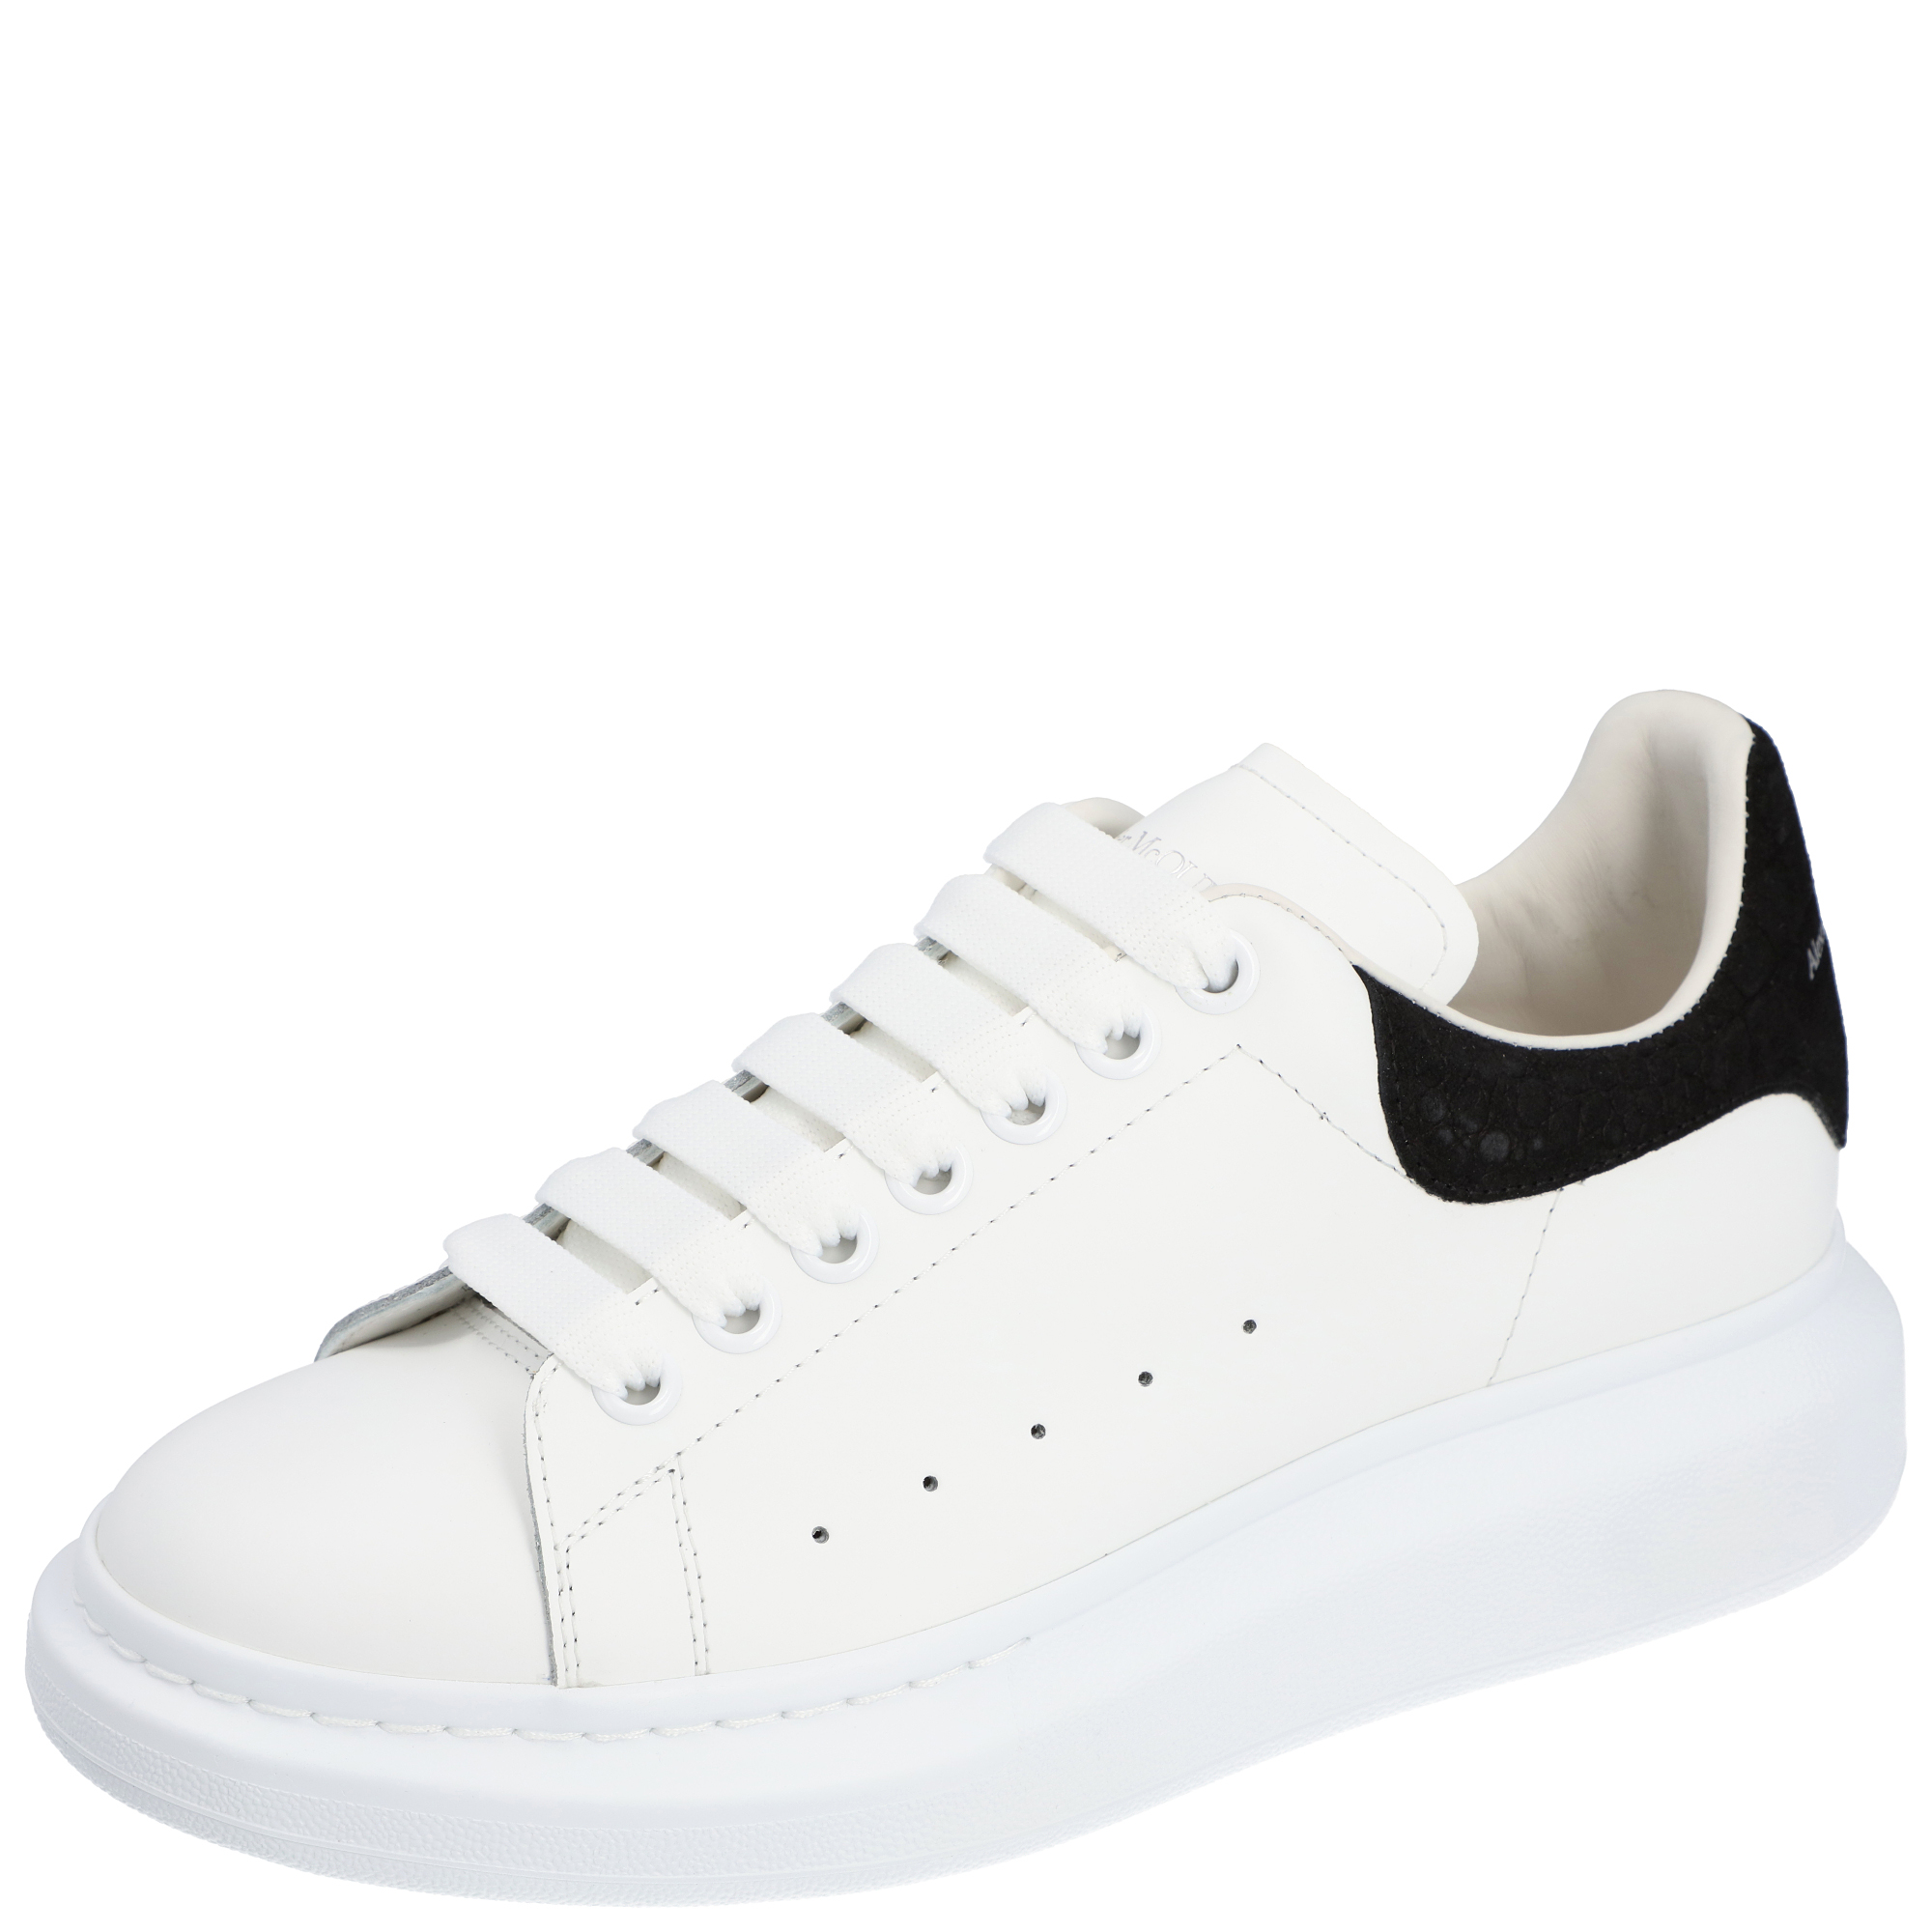 Alexander McQueen White/Black Leather Oversized Sneakers EU 40.5